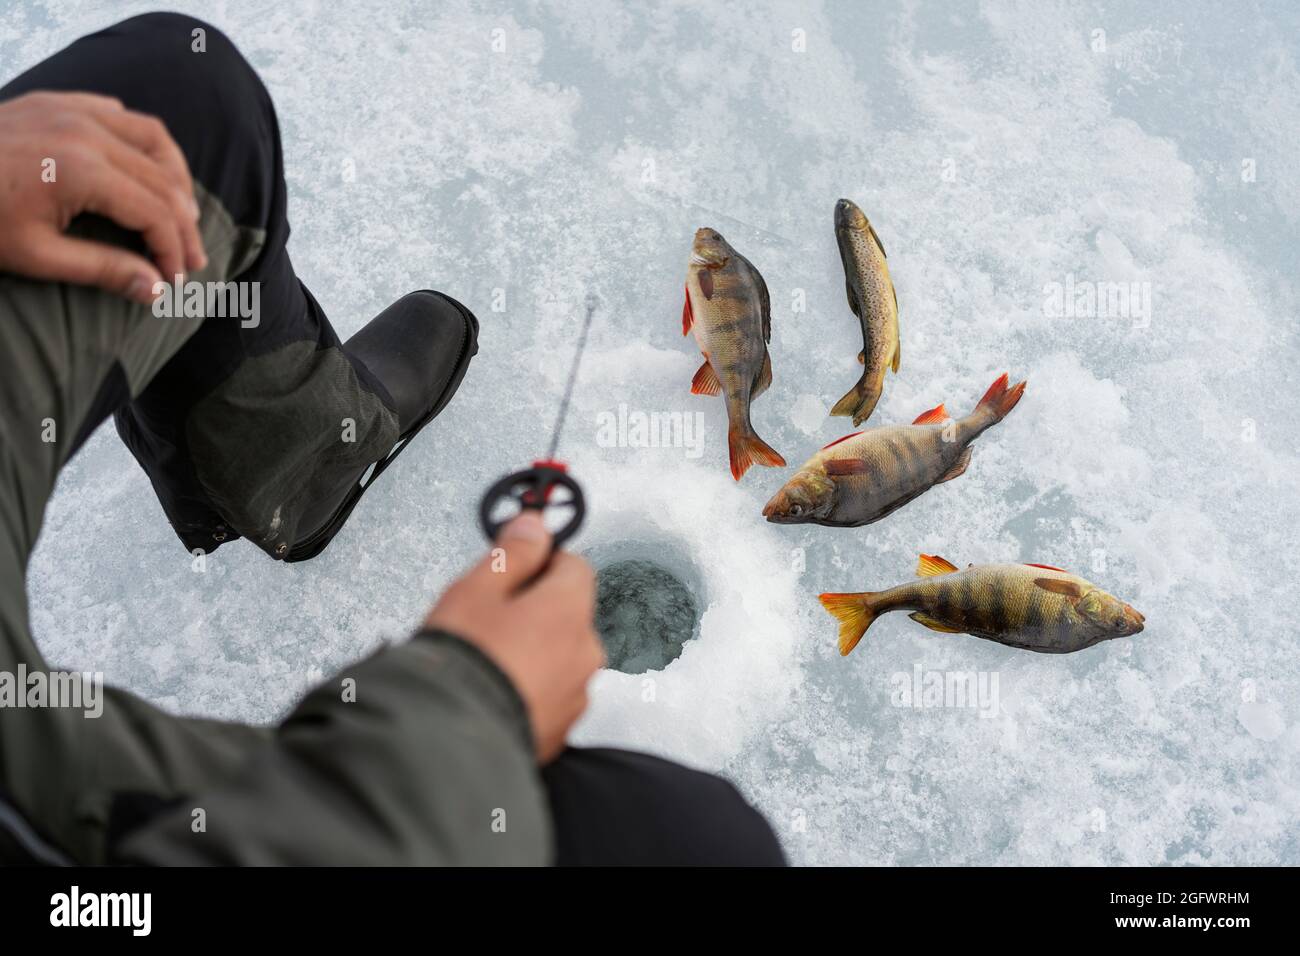 Man ice fishing in hole Stock Photo